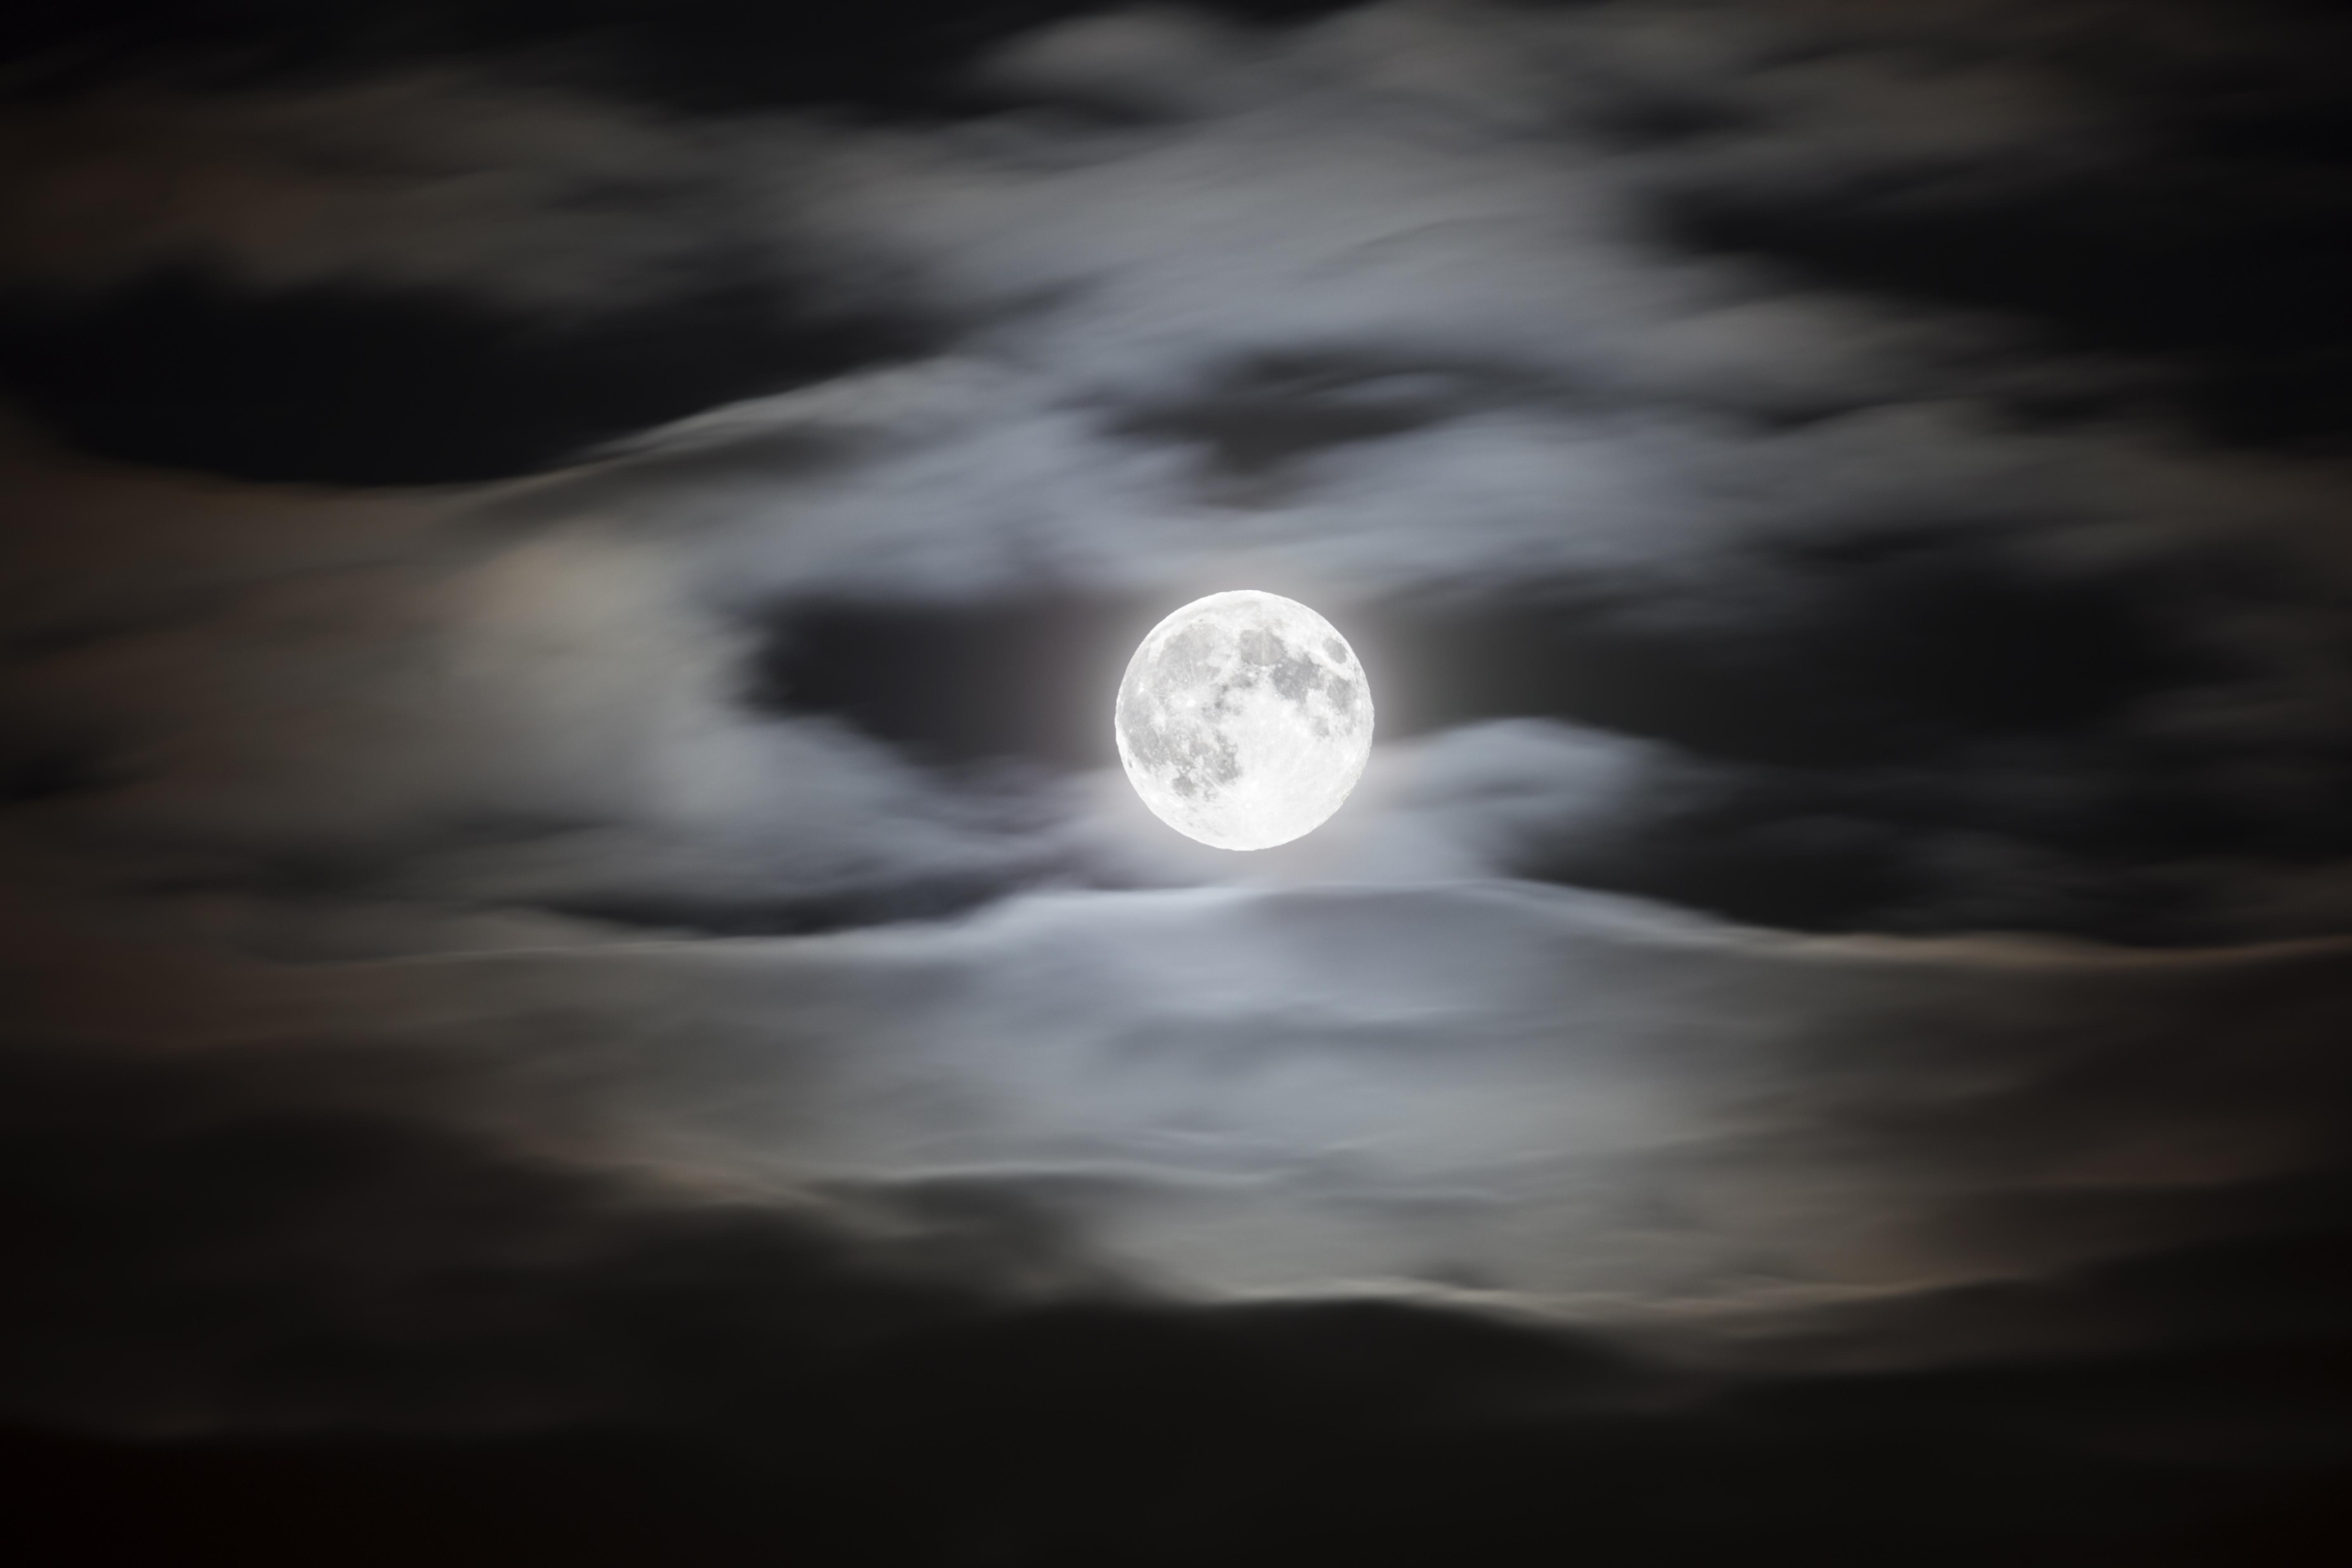 Full moon on a cloudy night sky